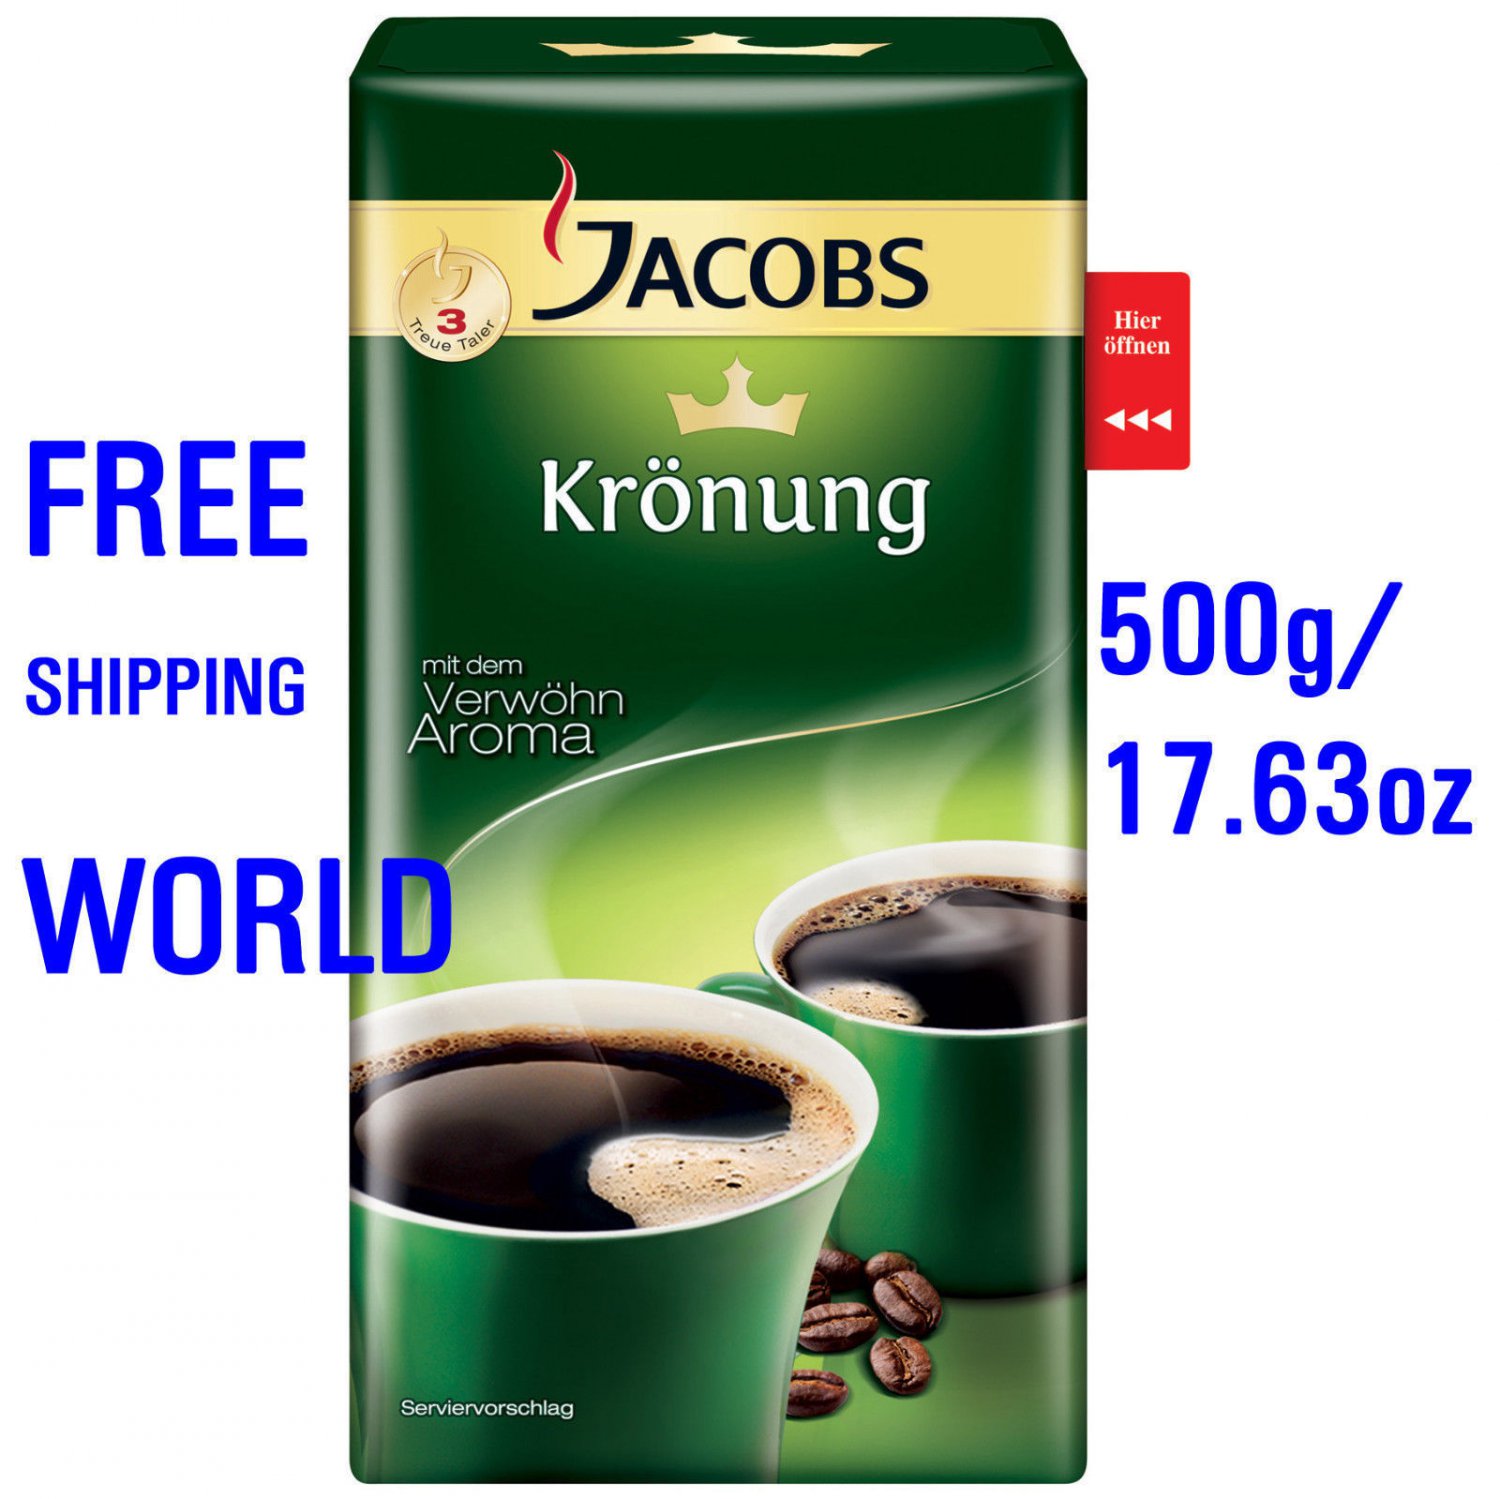 Jacobs Krönung Coffee Ground Coffee Germany's The Best